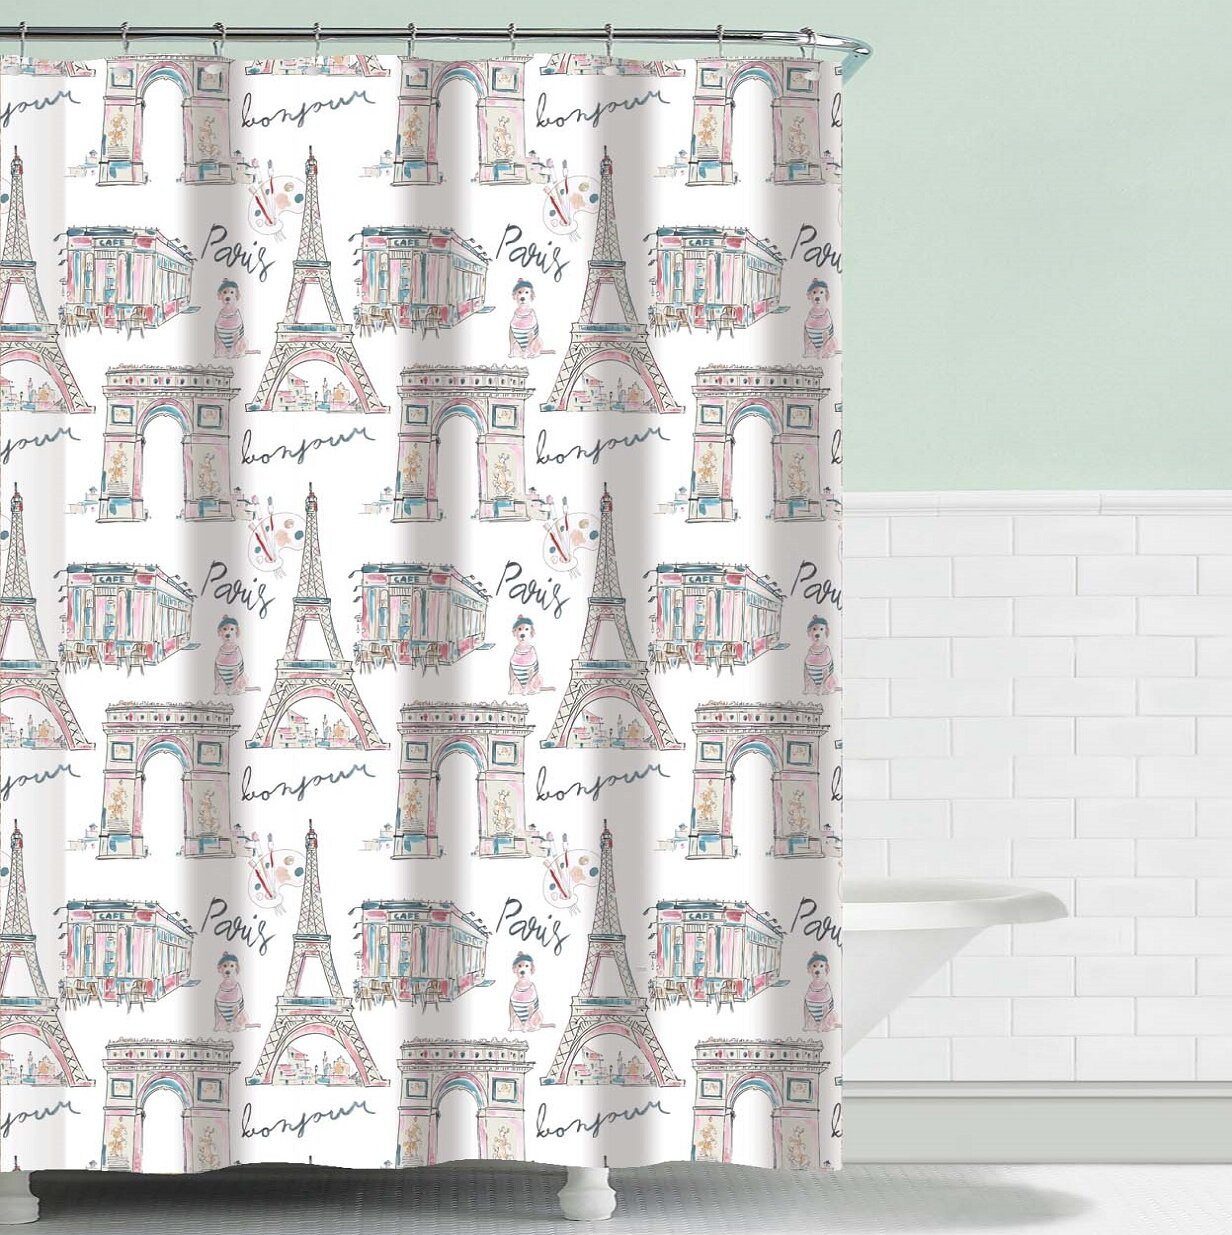 Rhino Family Polyester Waterproof Bath Shower Curtain W/ 12 Hooks Bathroom Mat